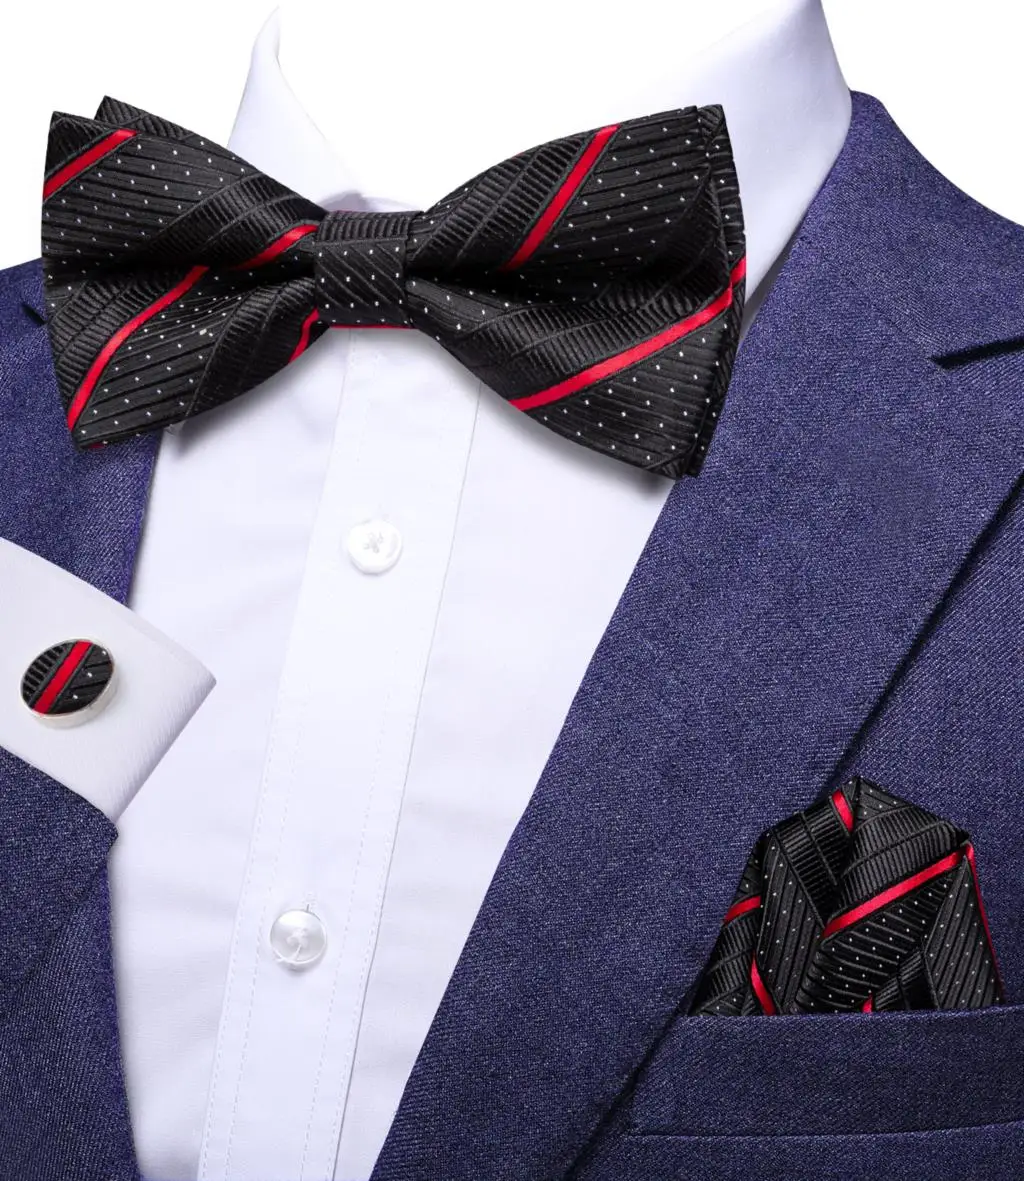 

Hi-Tie Striped Black Red Butterfly Silk Men Bow Tie Hanky Cufflink Jacquard Pre Tied Bowtie for Male Business Wedding Party